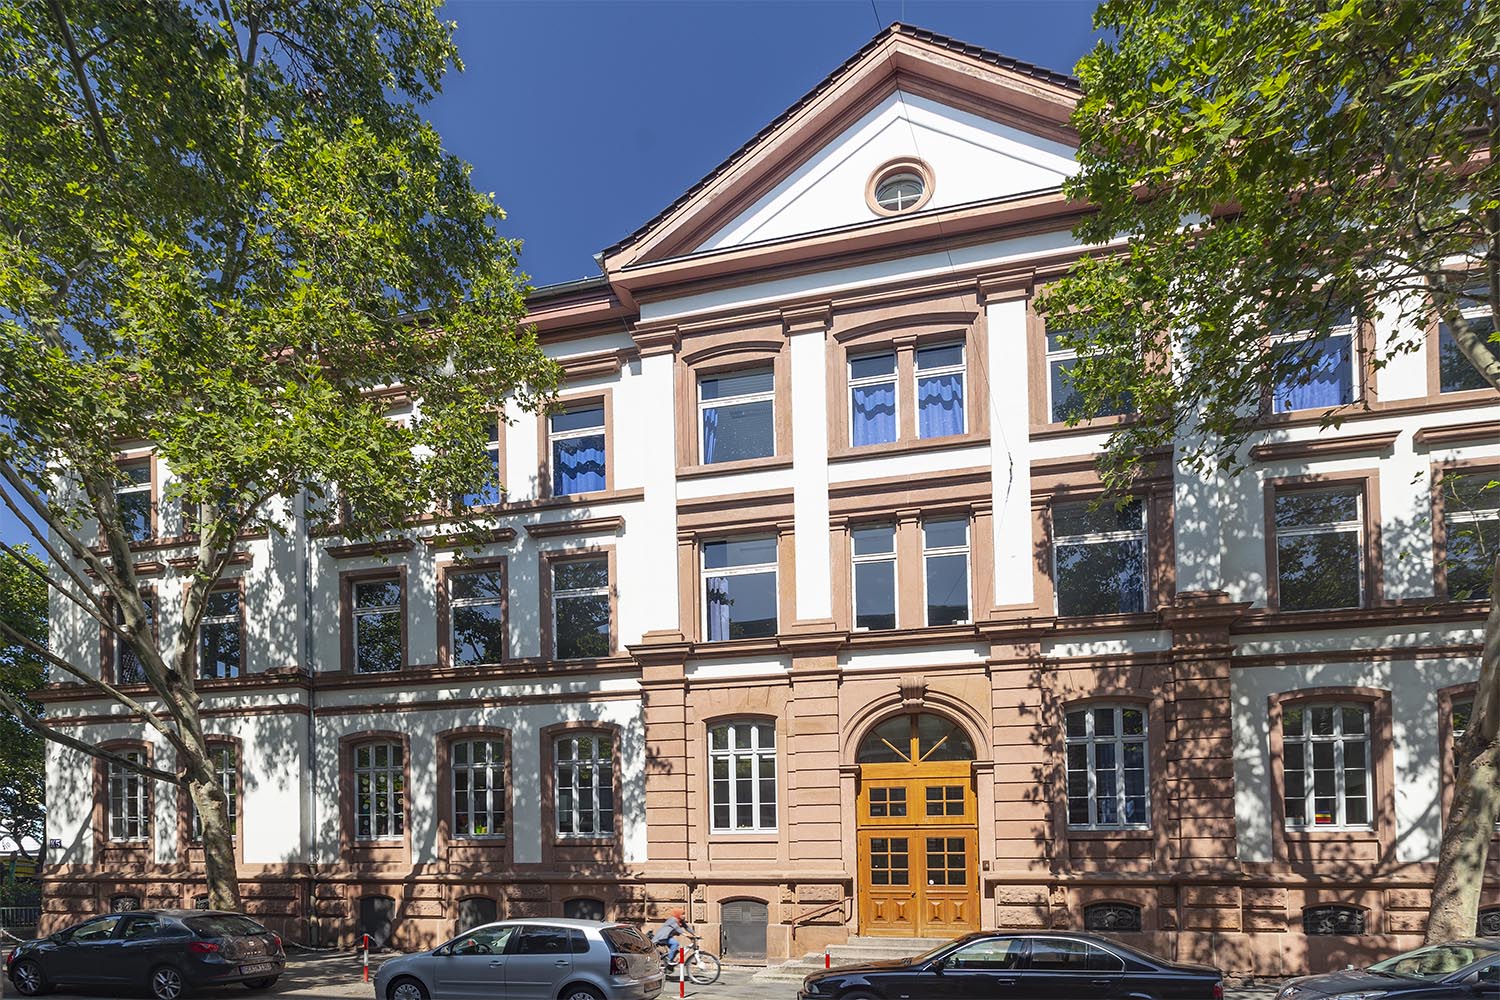 Johannes-Kepler-Schule, Mannheim